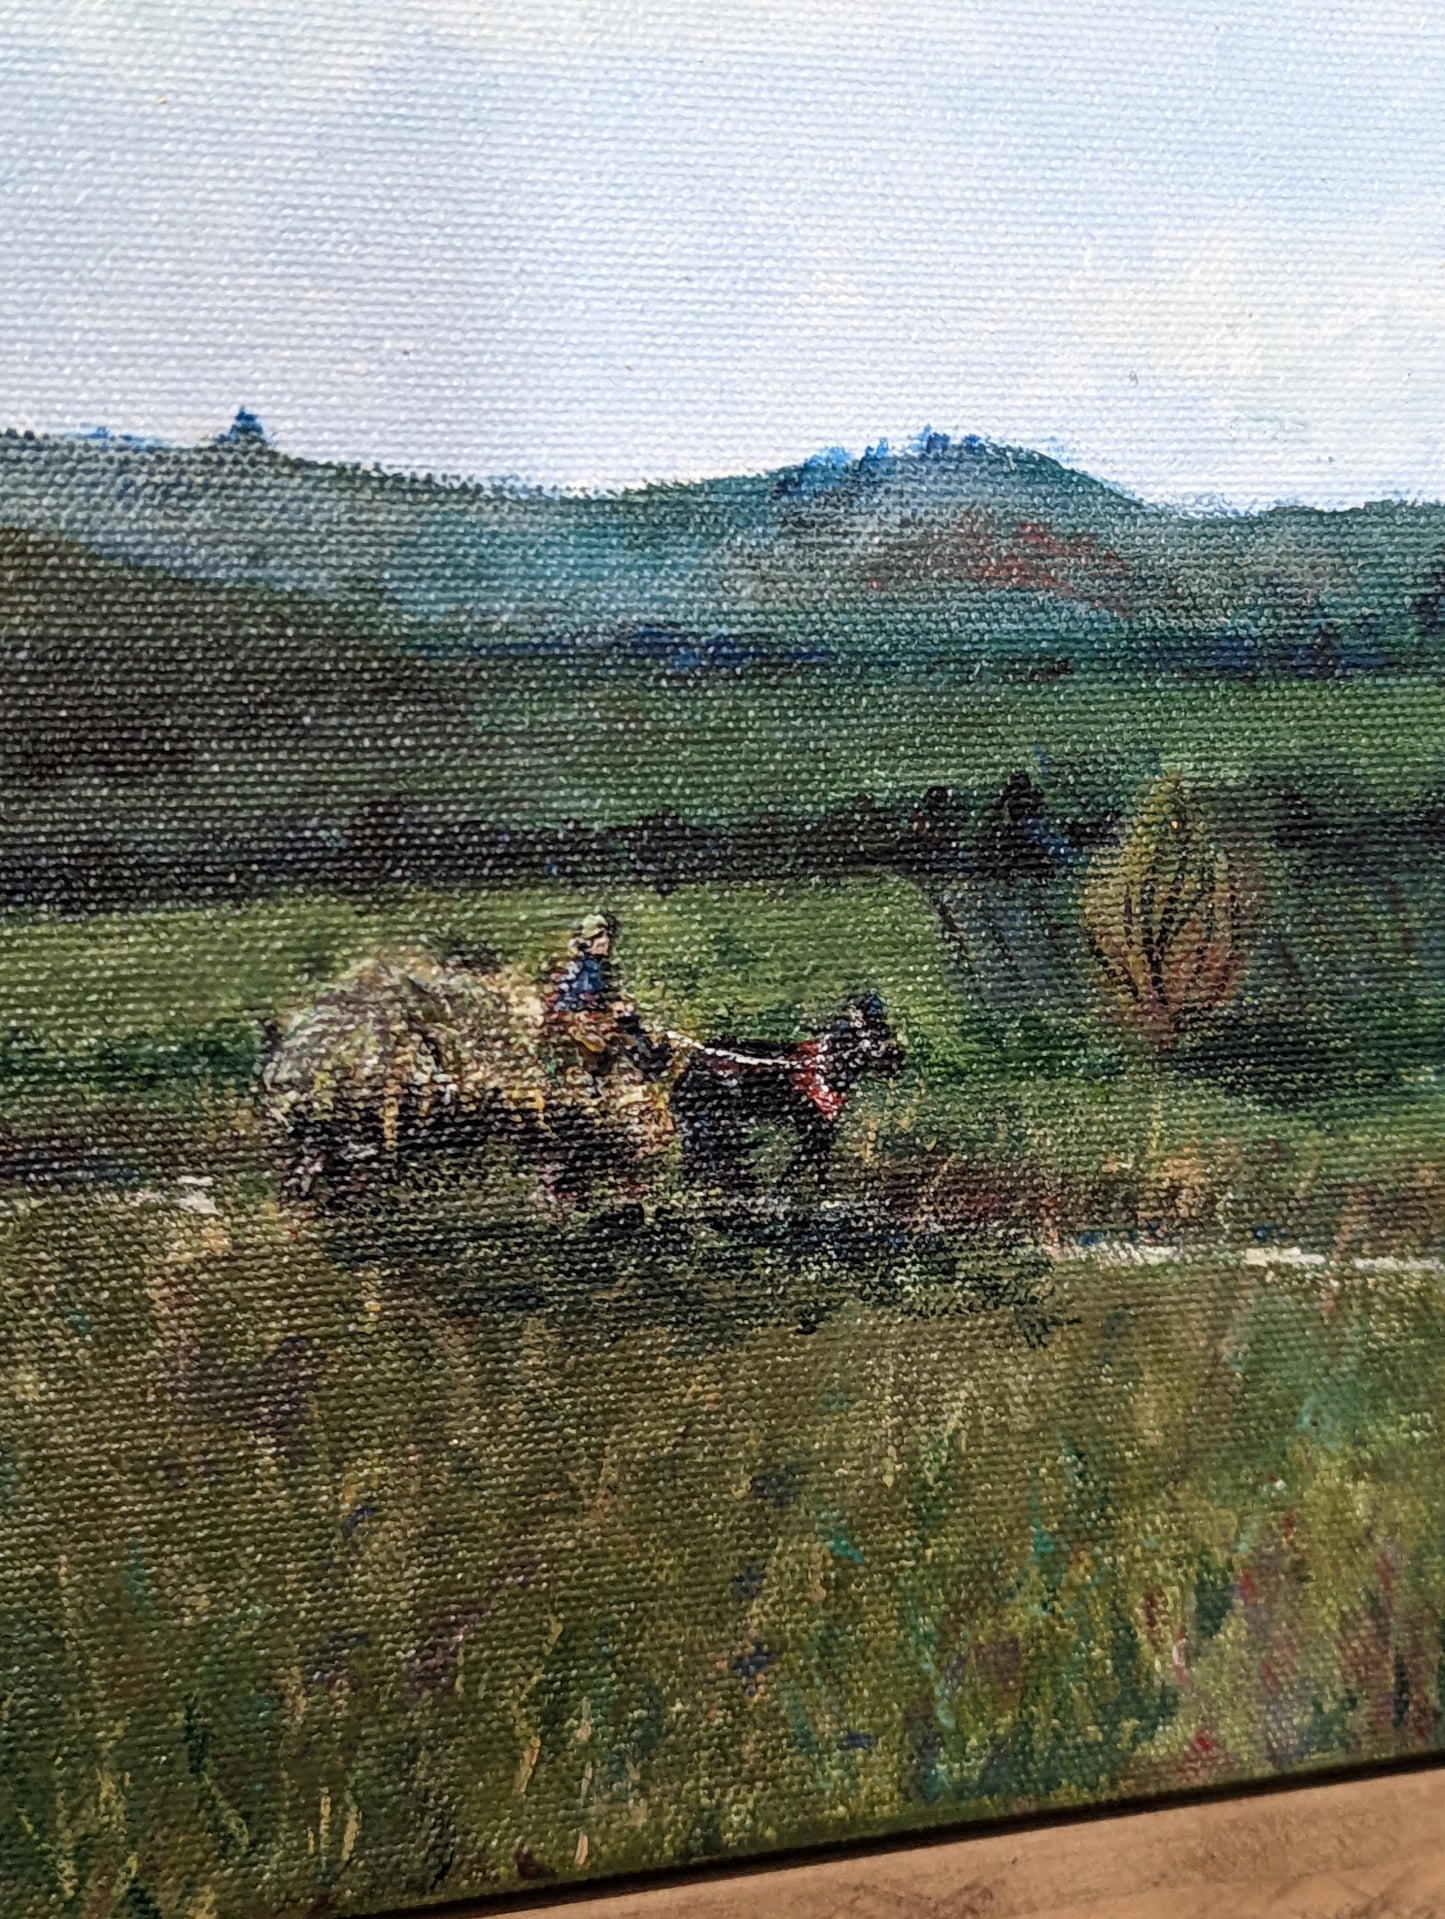 acrylic painting of romania hay wagon and horse laura heisler studios